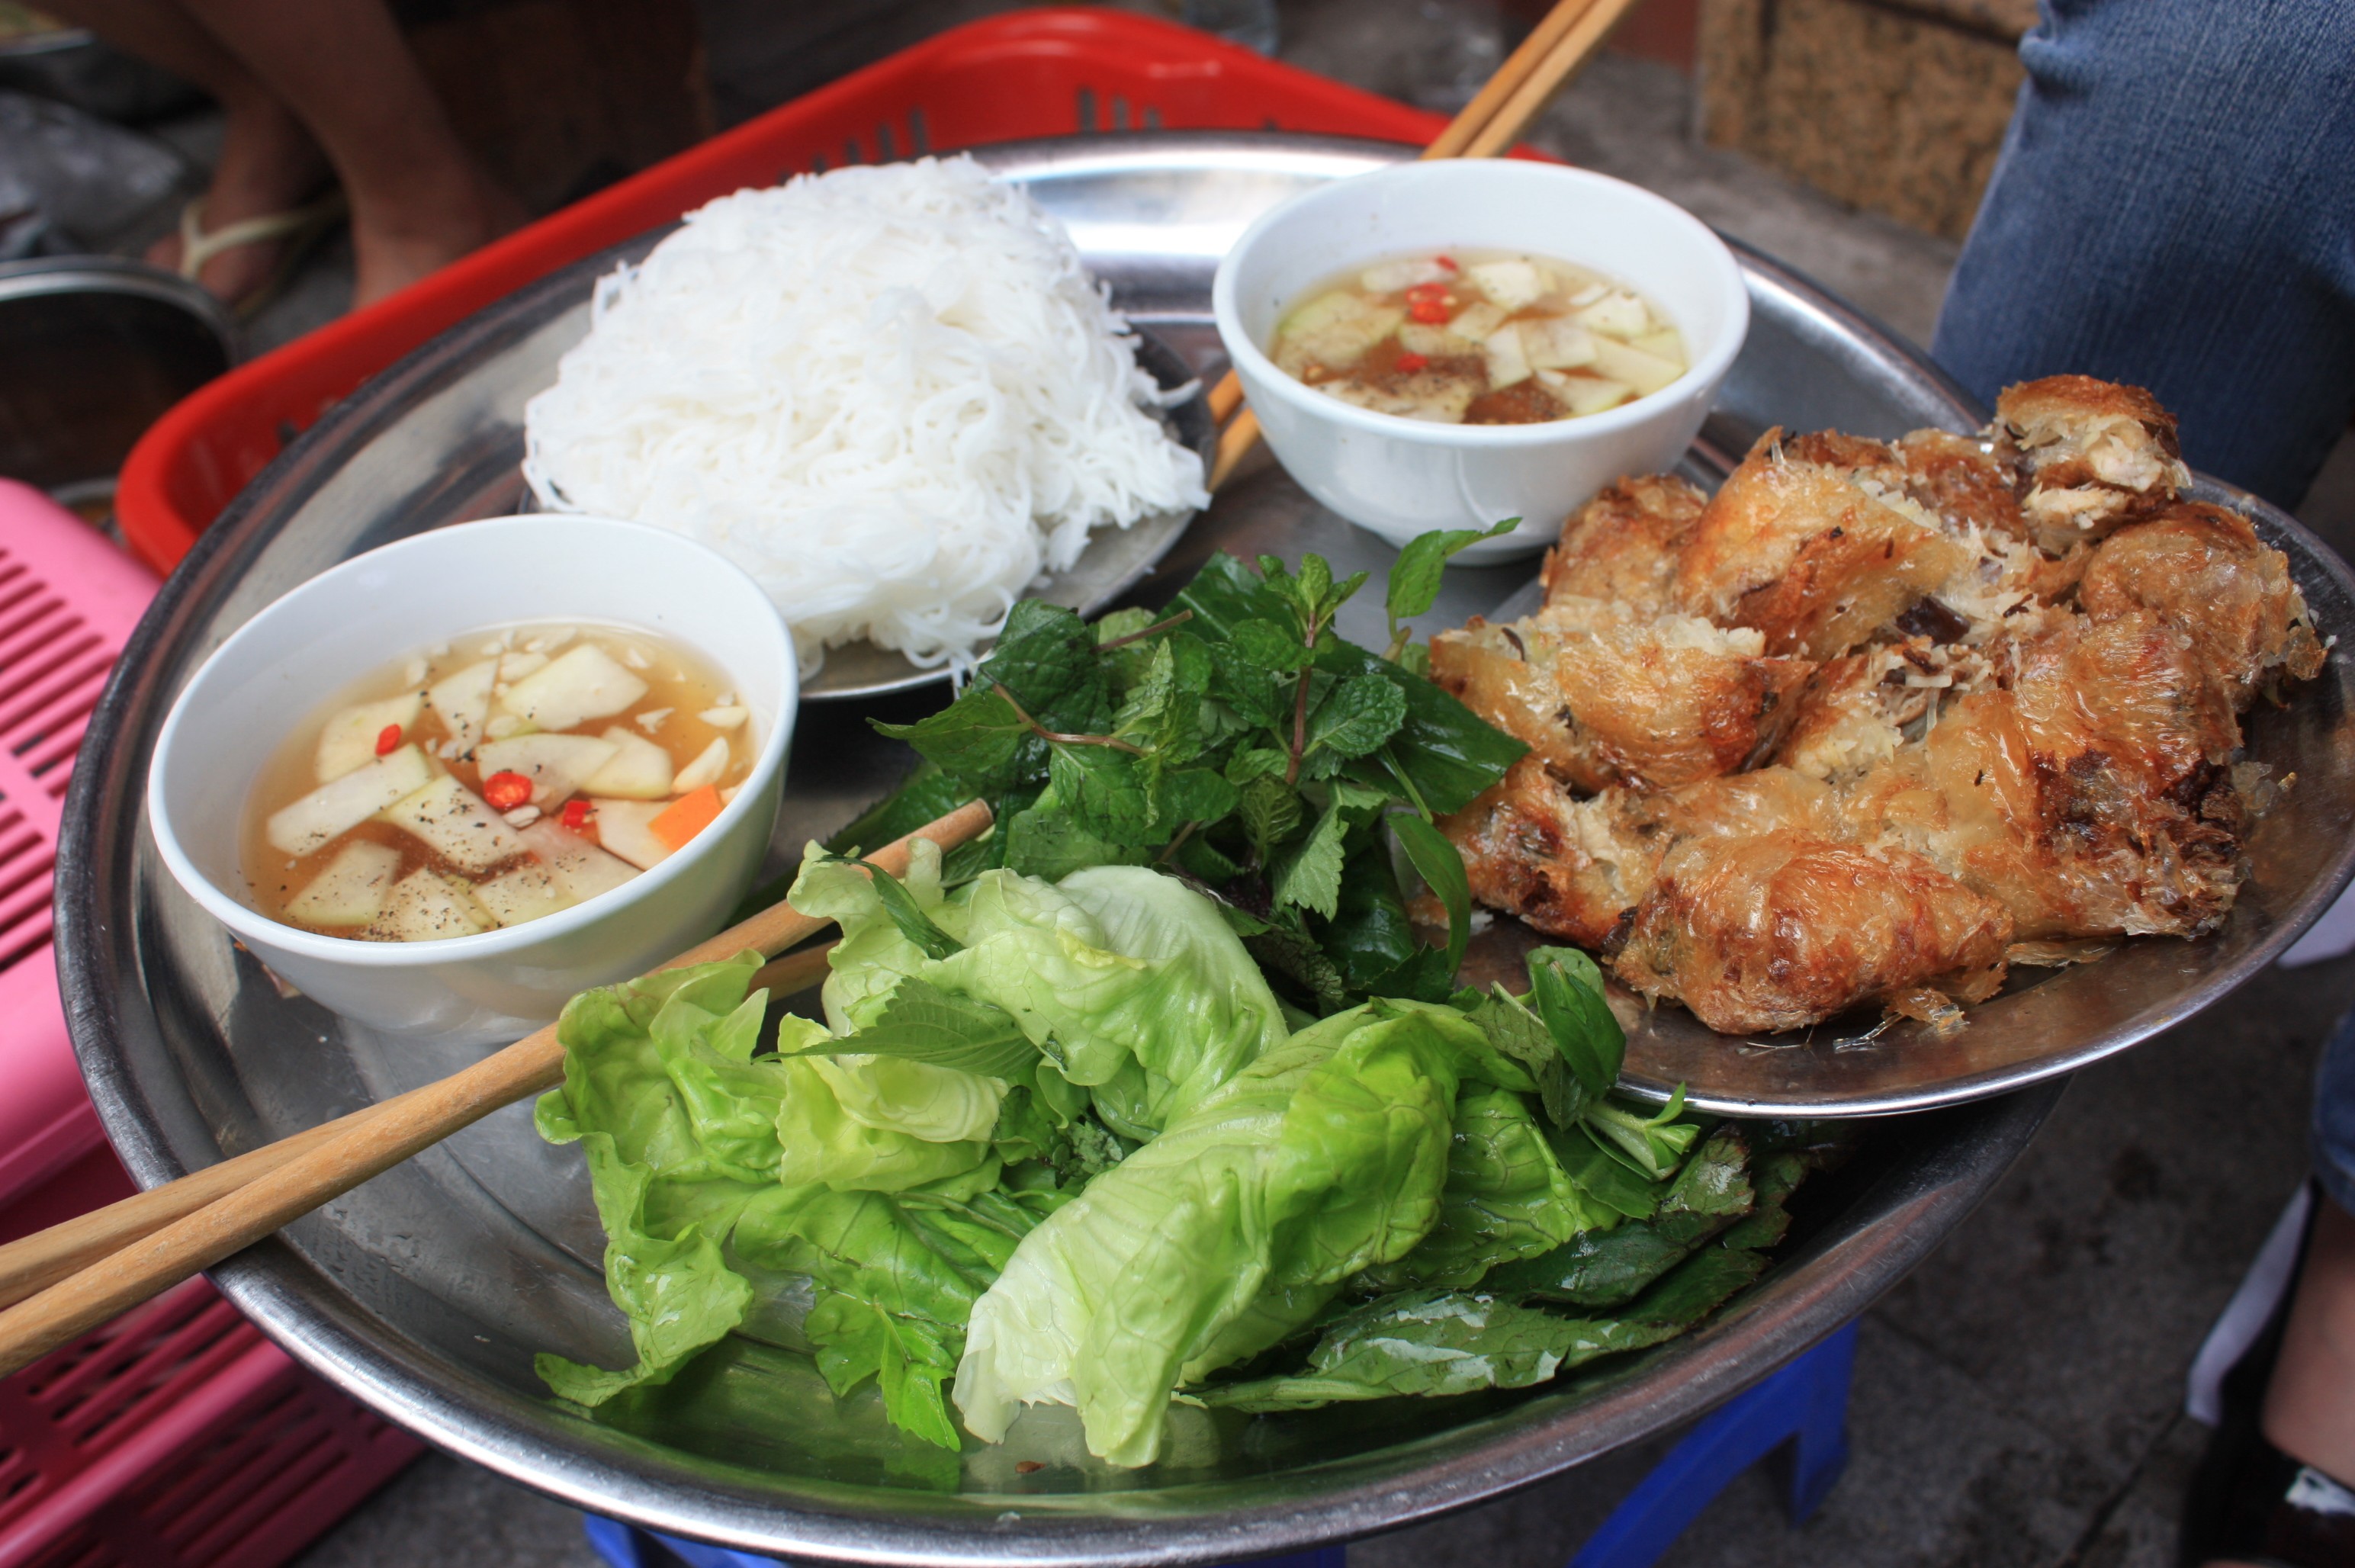 Ханой еда. Вьетнам еда Национальная. Вьетнам Нячанг еда. Традиционное вьетнамское блюдо. Вьетнамская кухня национальные блюда.